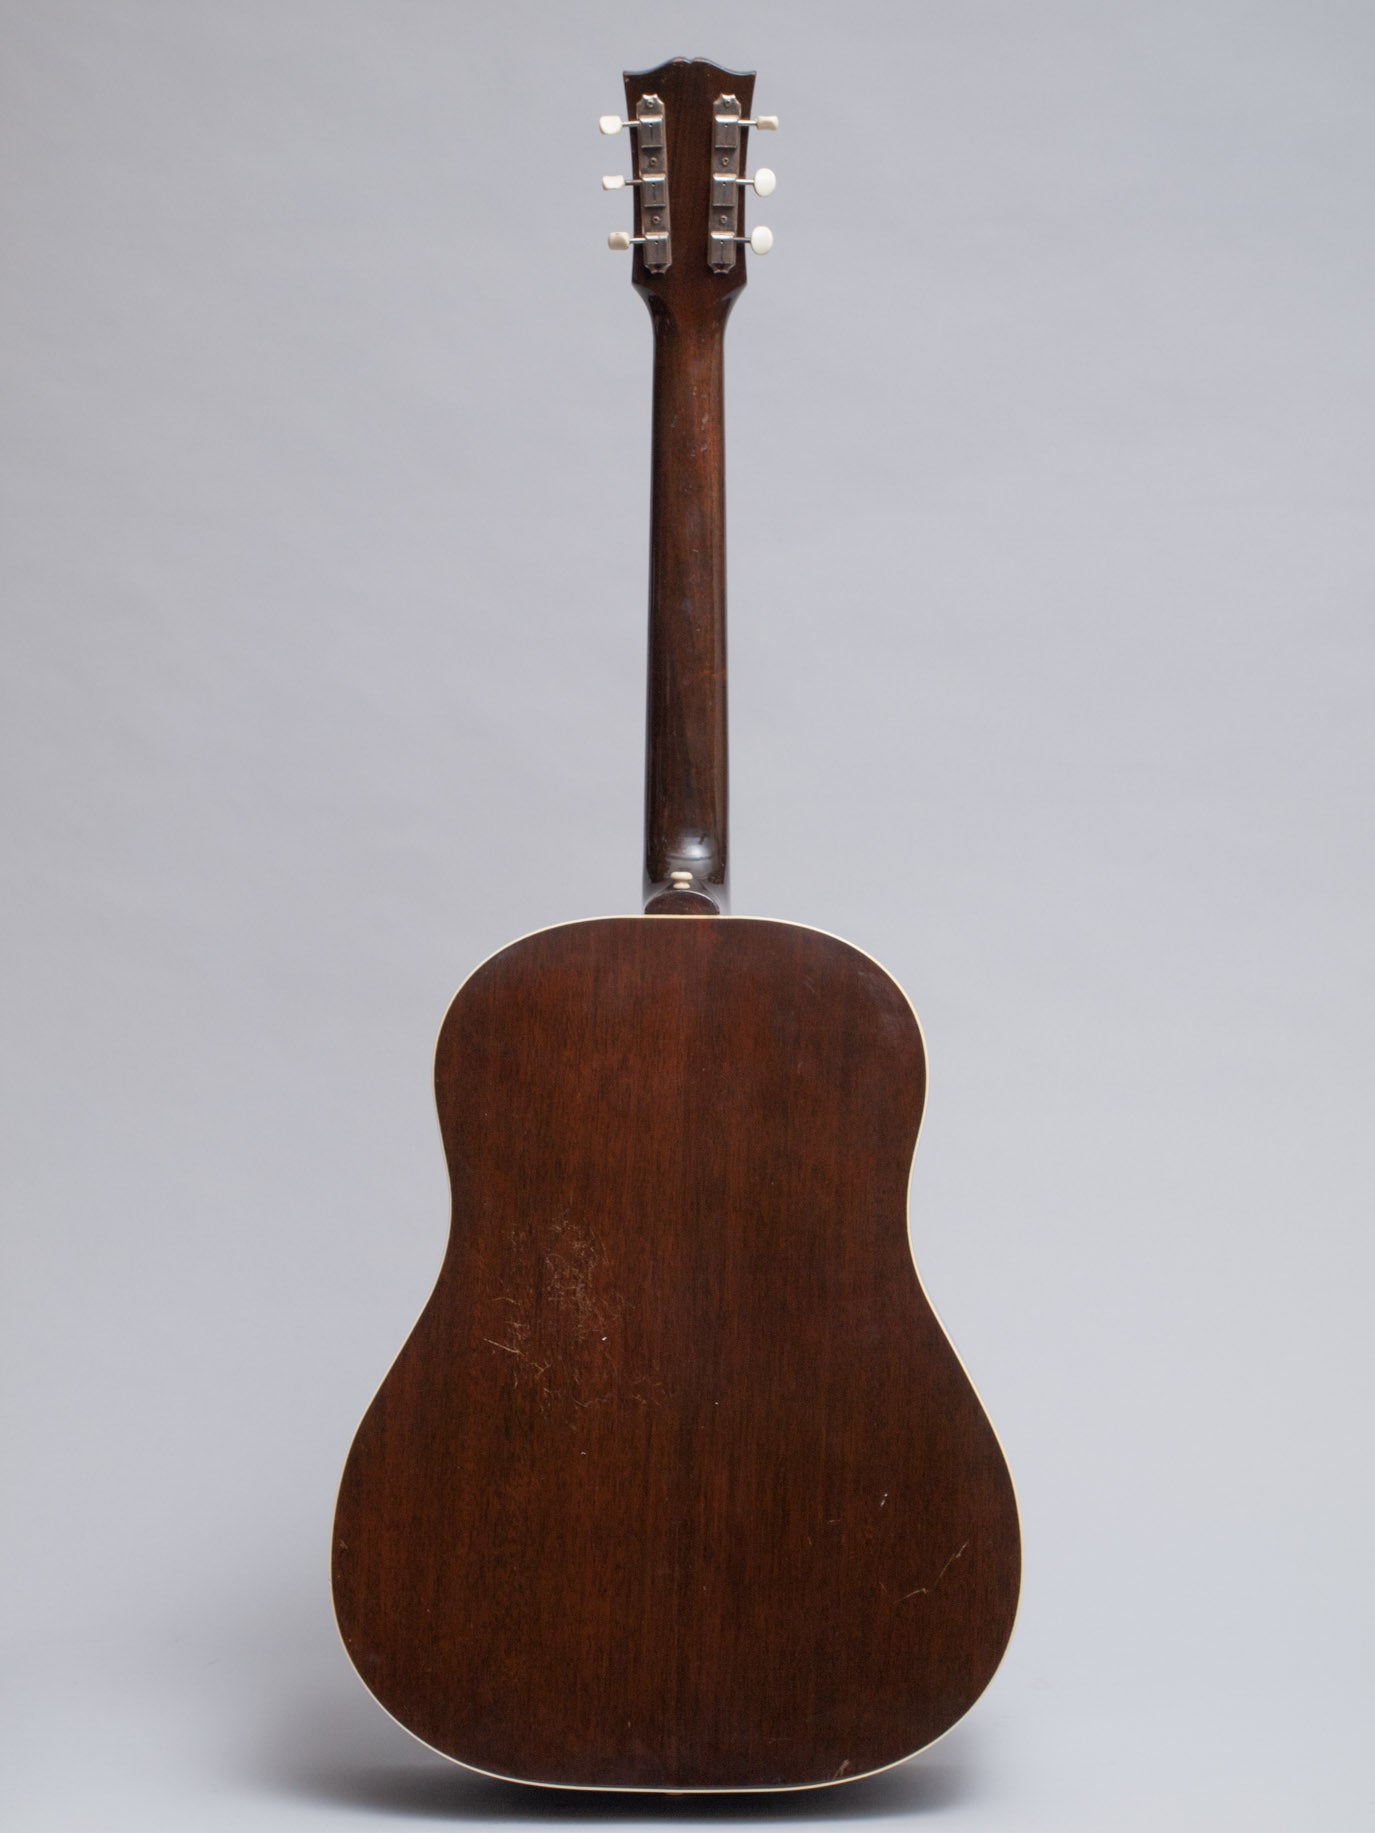 1951 Gibson J-45